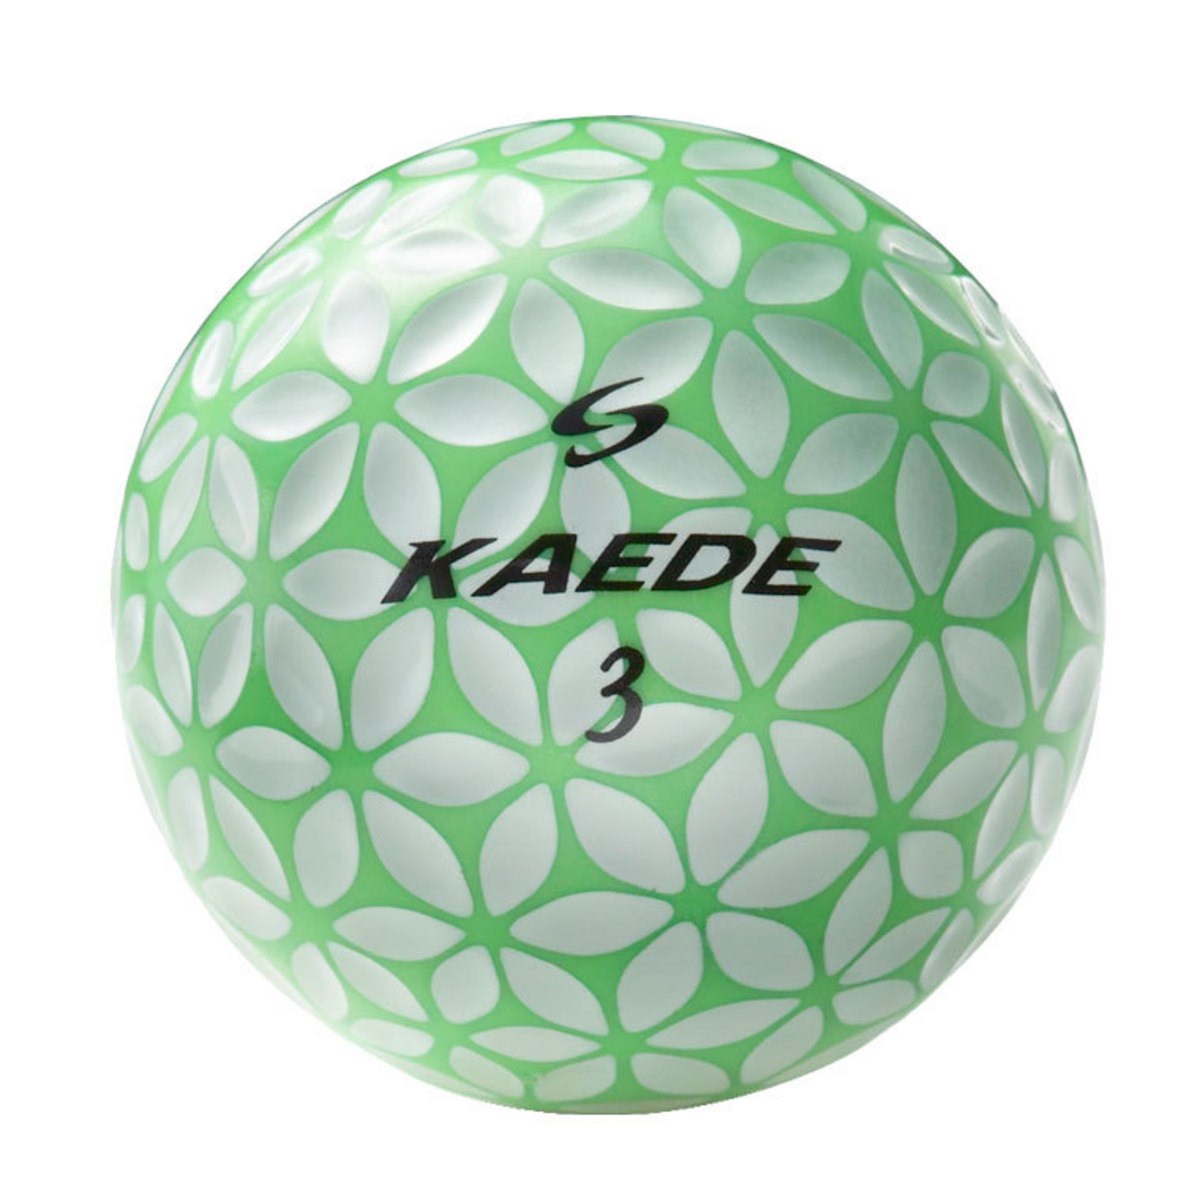 Kaede カエデ ボール 1スリーブ 3個入り サソー Kaede 通販 Gdoゴルフショップ